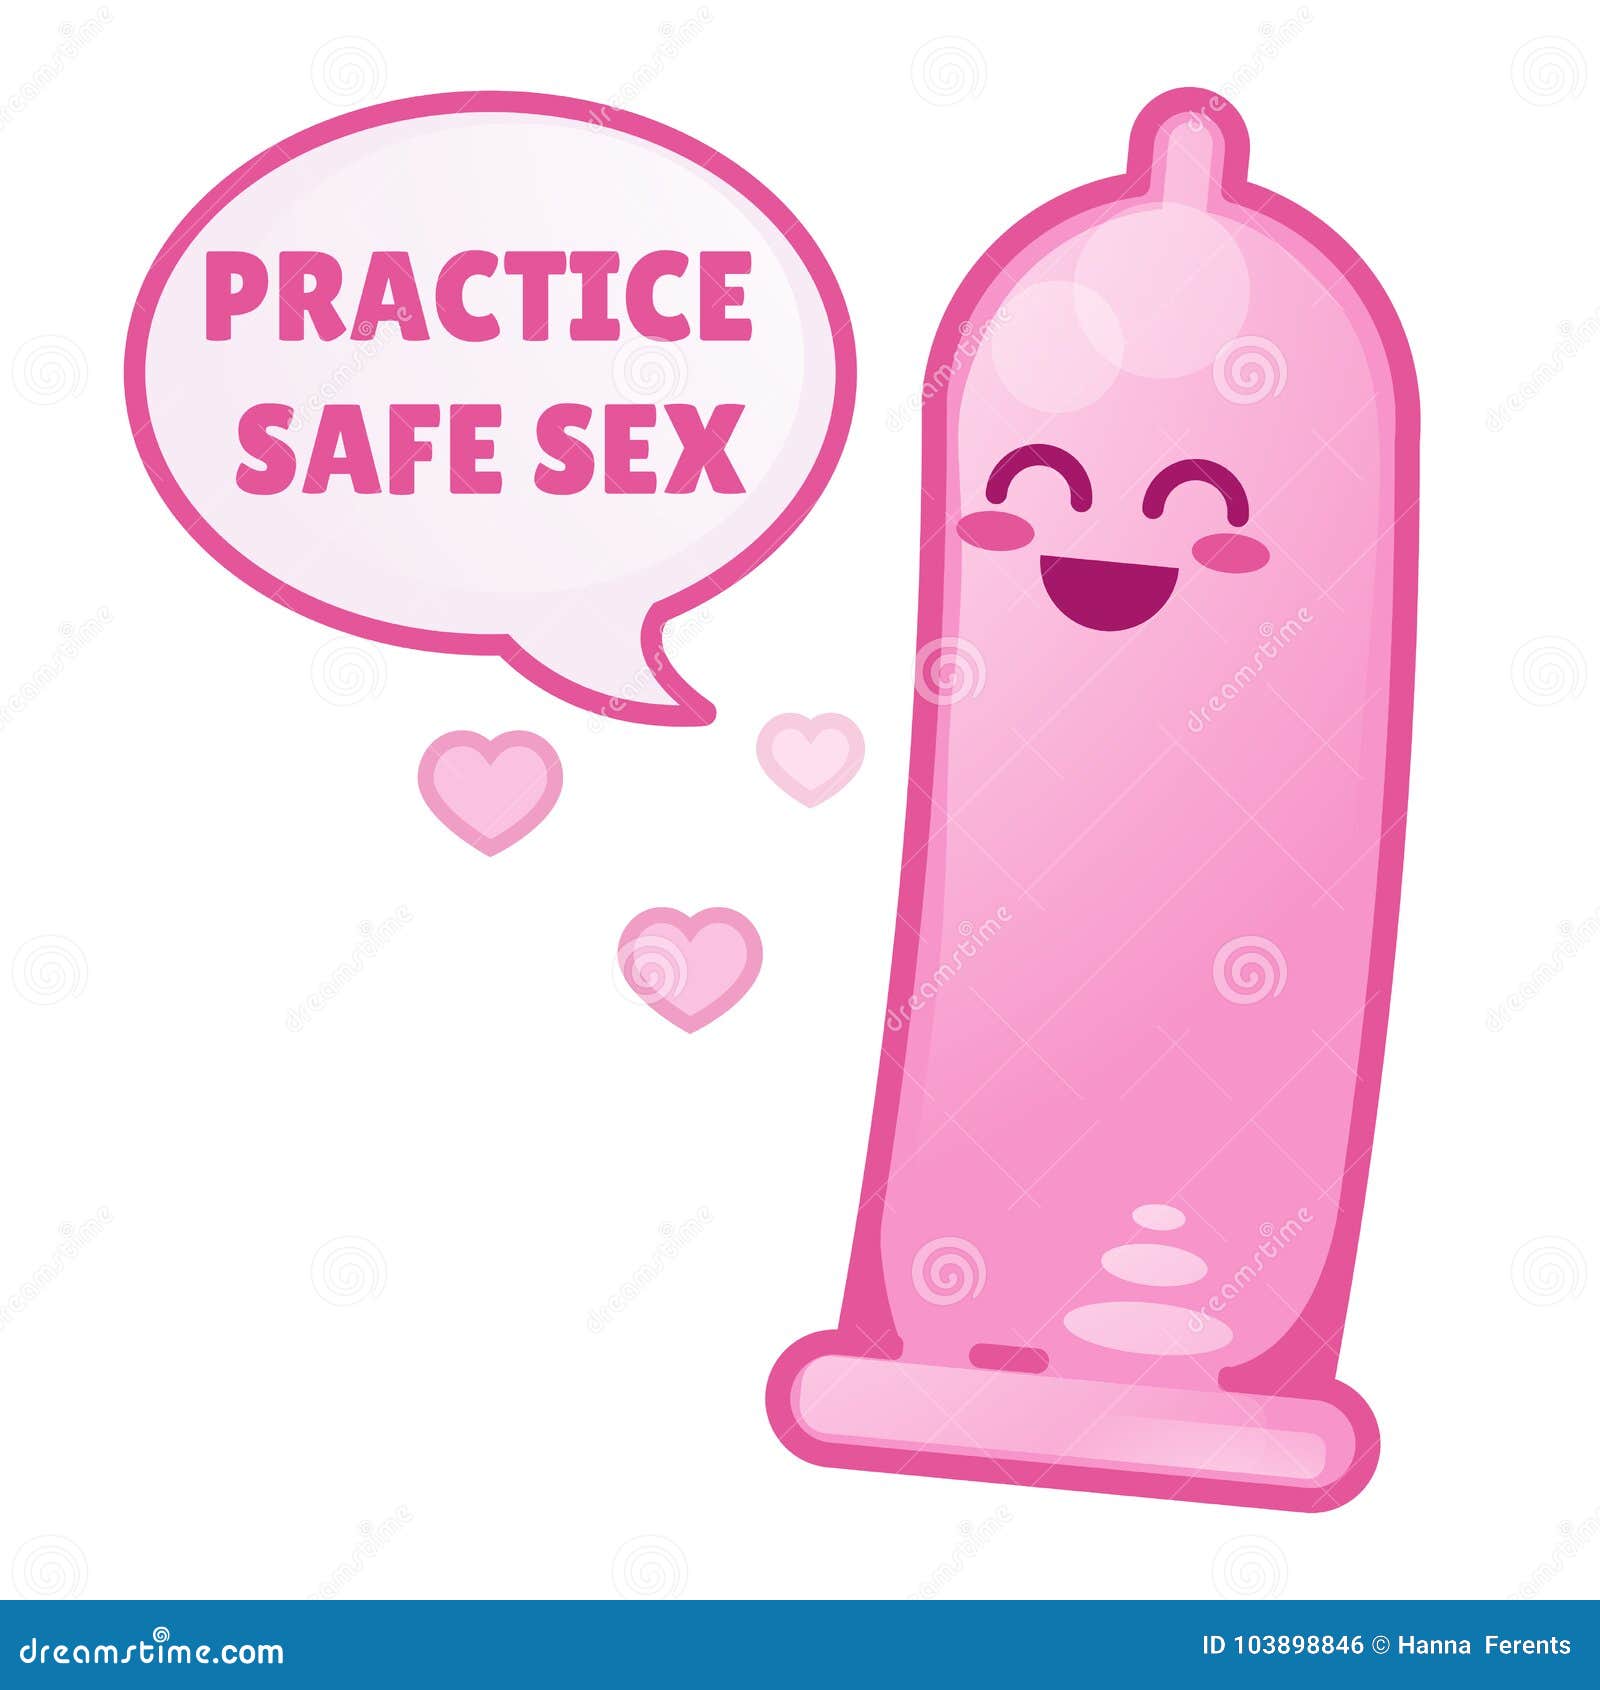 Cute Condom Say Practice Safe Sex Contraception Sex Education Banner